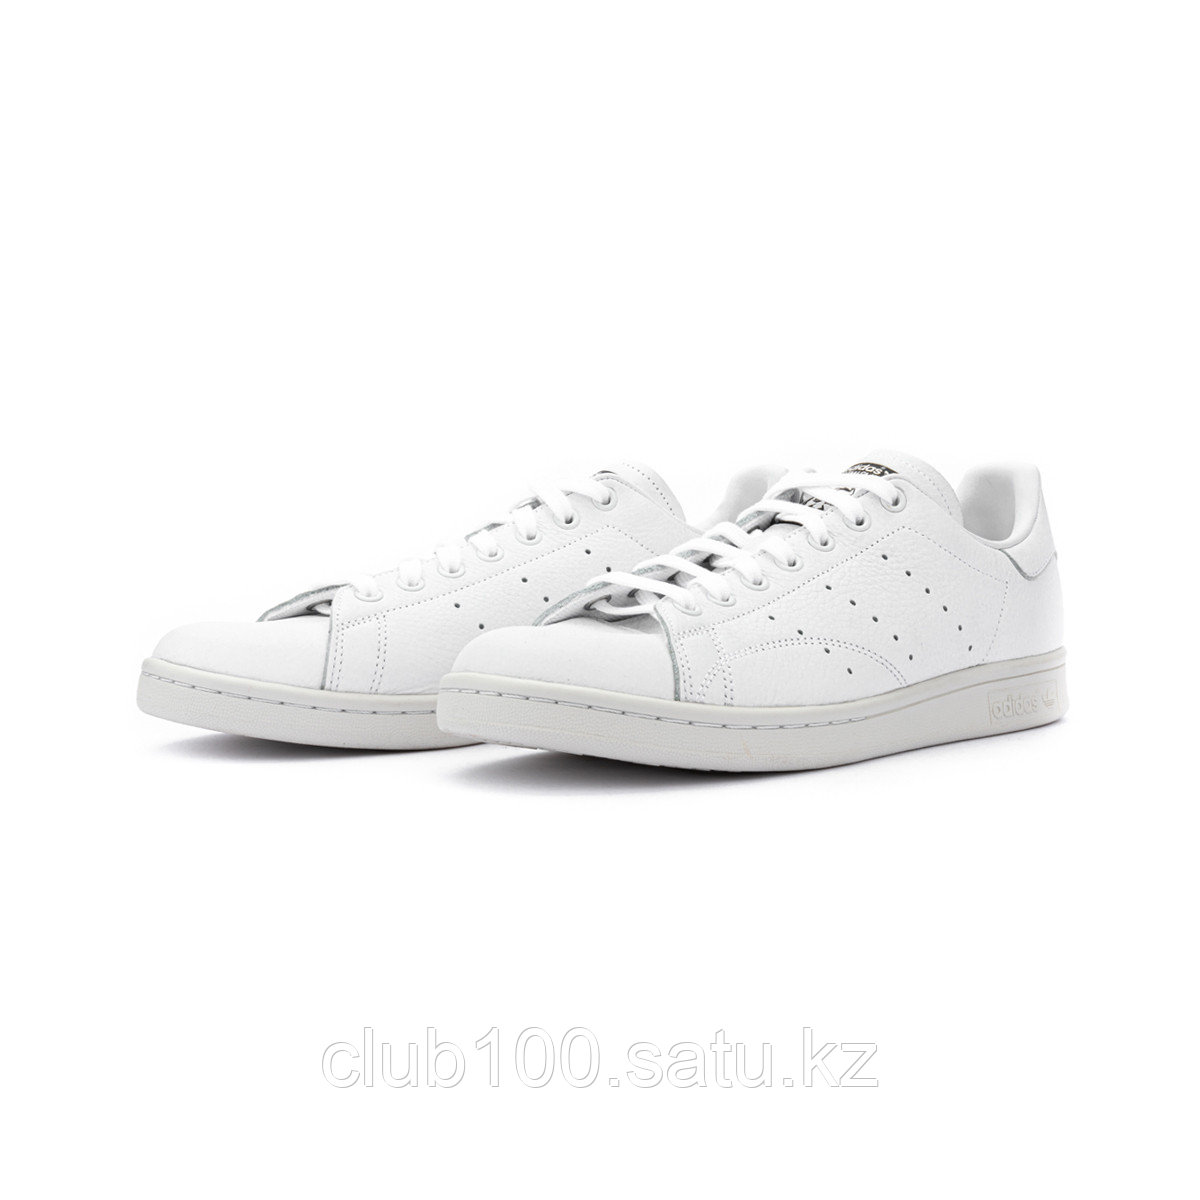 Кеды Adidas Stan Smith Cloud White F34071 размер: 43: продажа, цена в  Алматы. Товары, общее от "Кроссовки Алматы CLUB100.kz" - 74325612